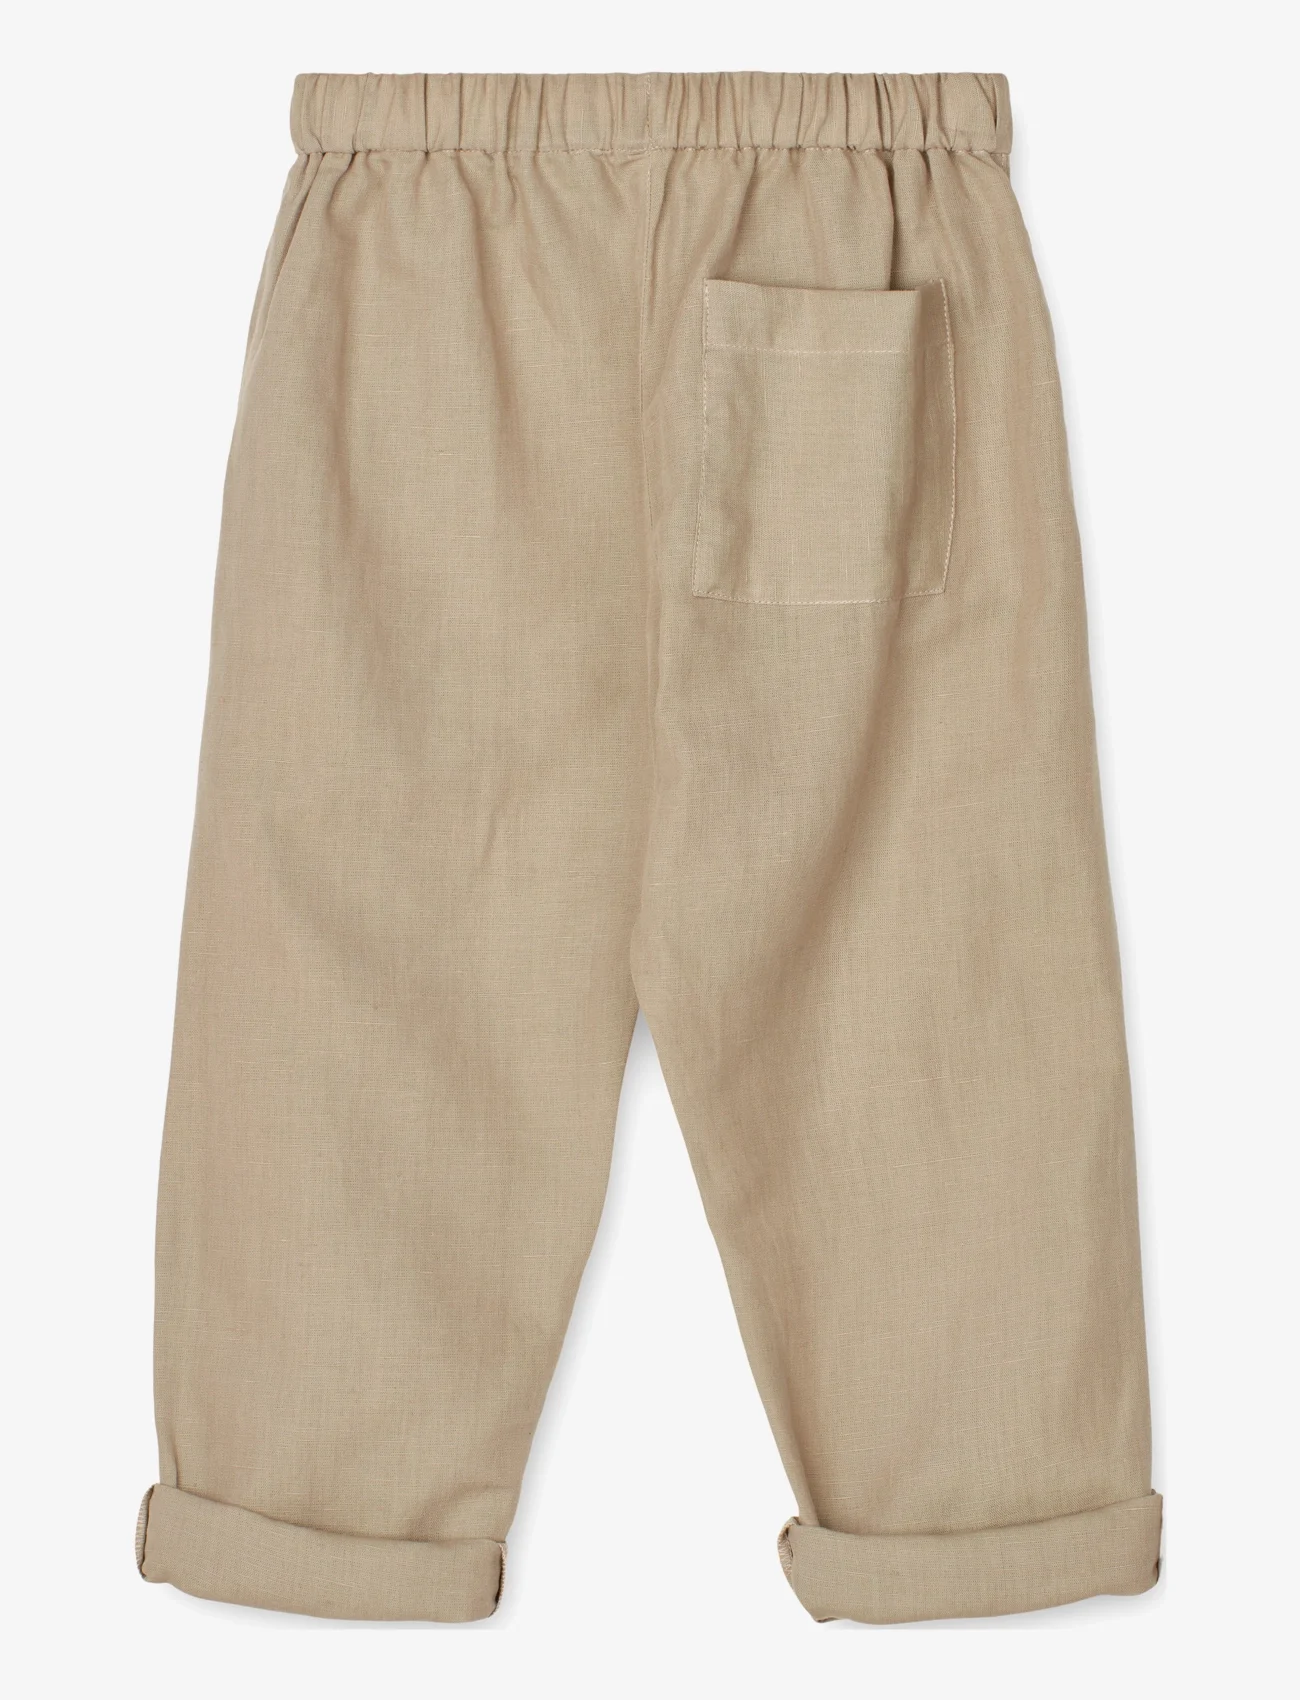 Liewood - Orlando Linen Pants - bukser - mist - 1